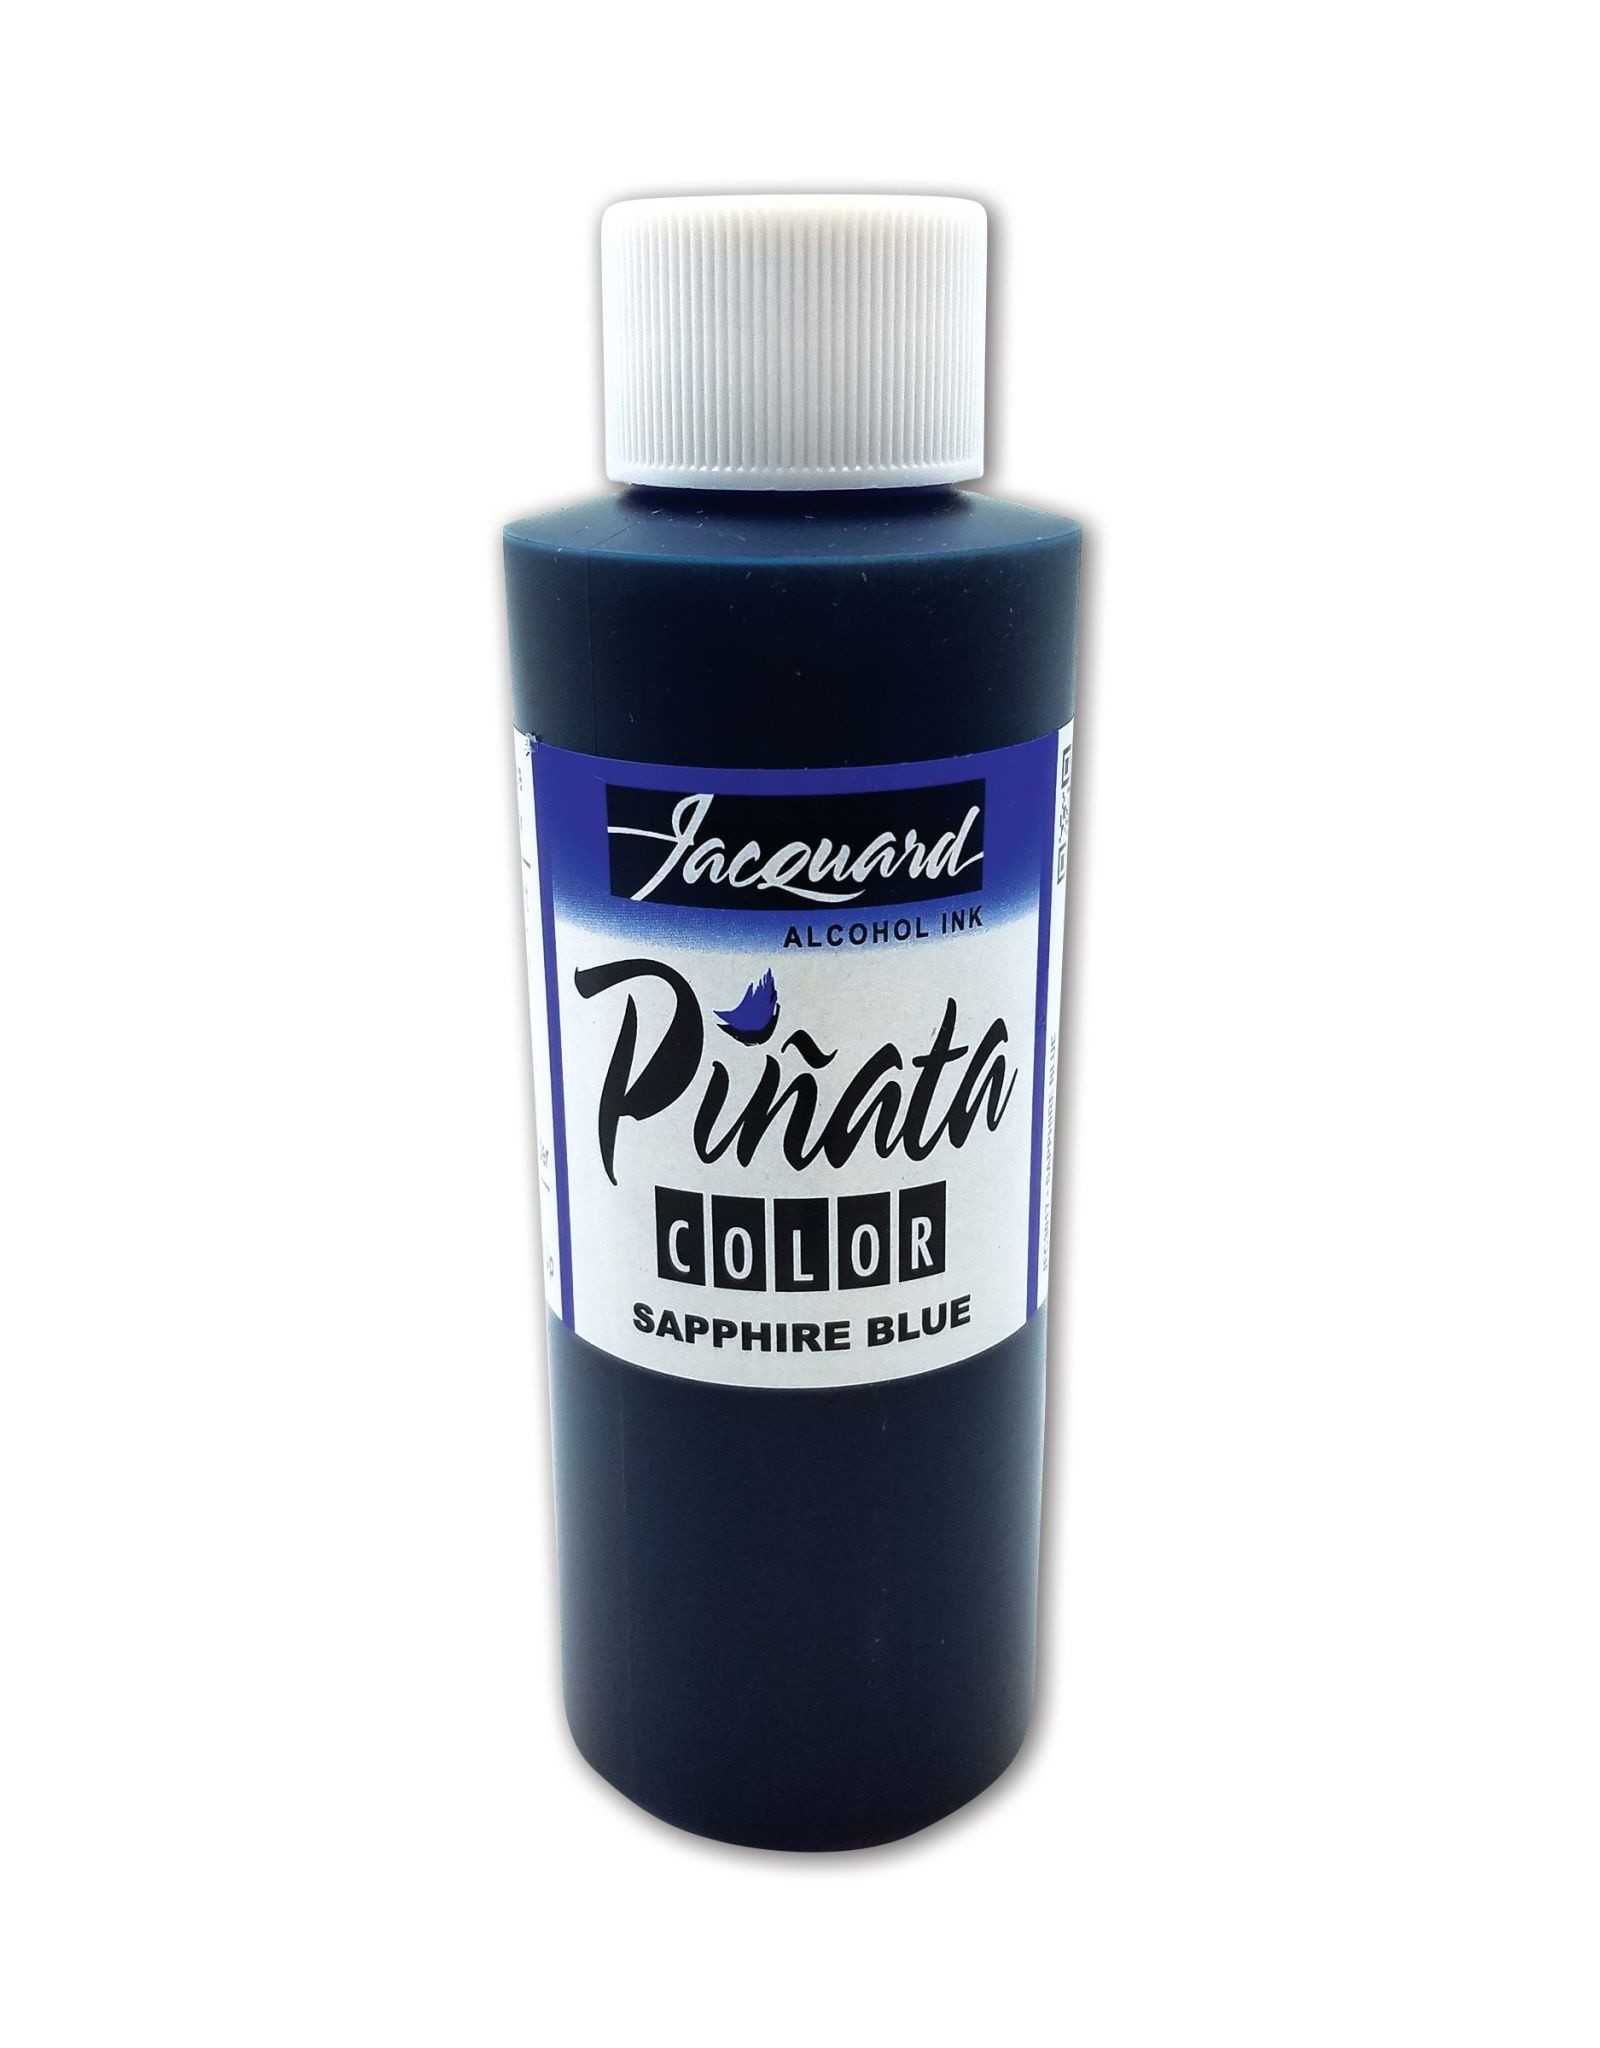 Jacquard Jacquard Pinata Alcohol Ink #017 Sapphire Blue 4oz